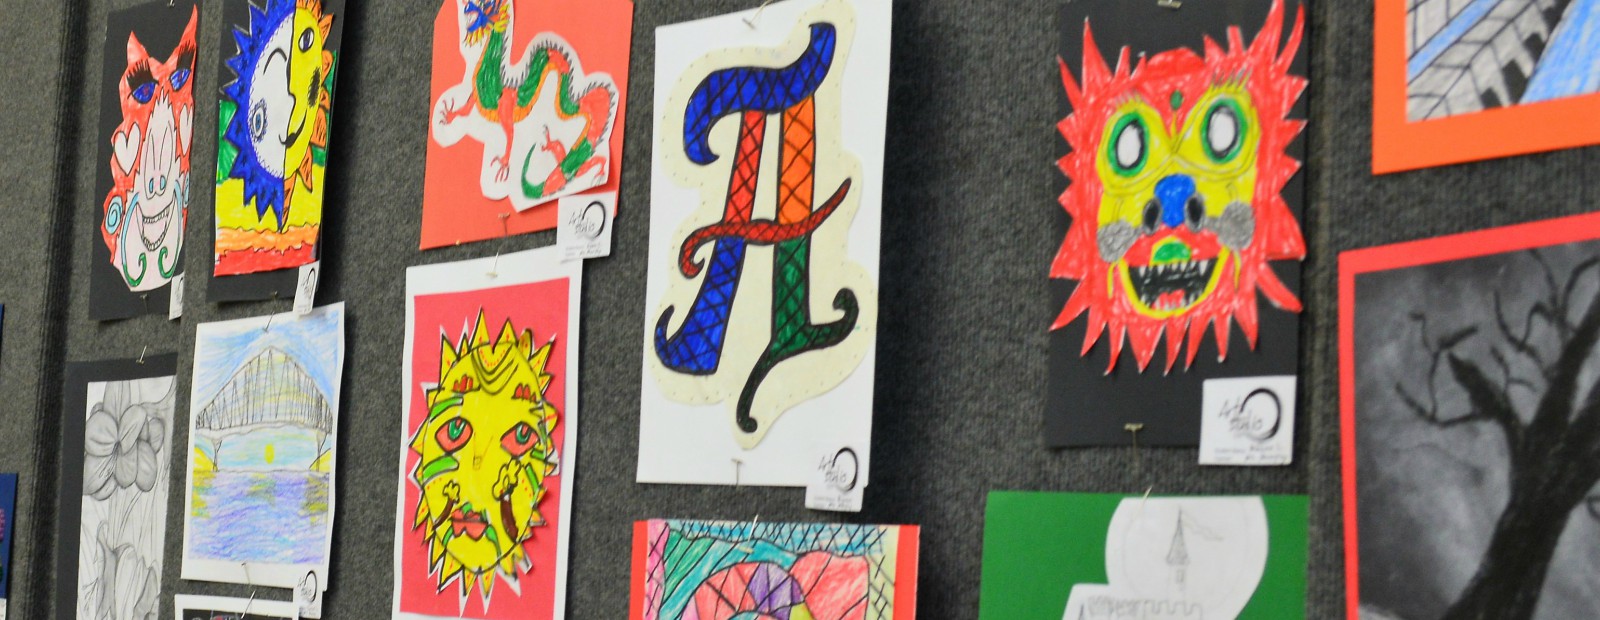 Port Huron student artwork hangs on display inside Studio 1219.